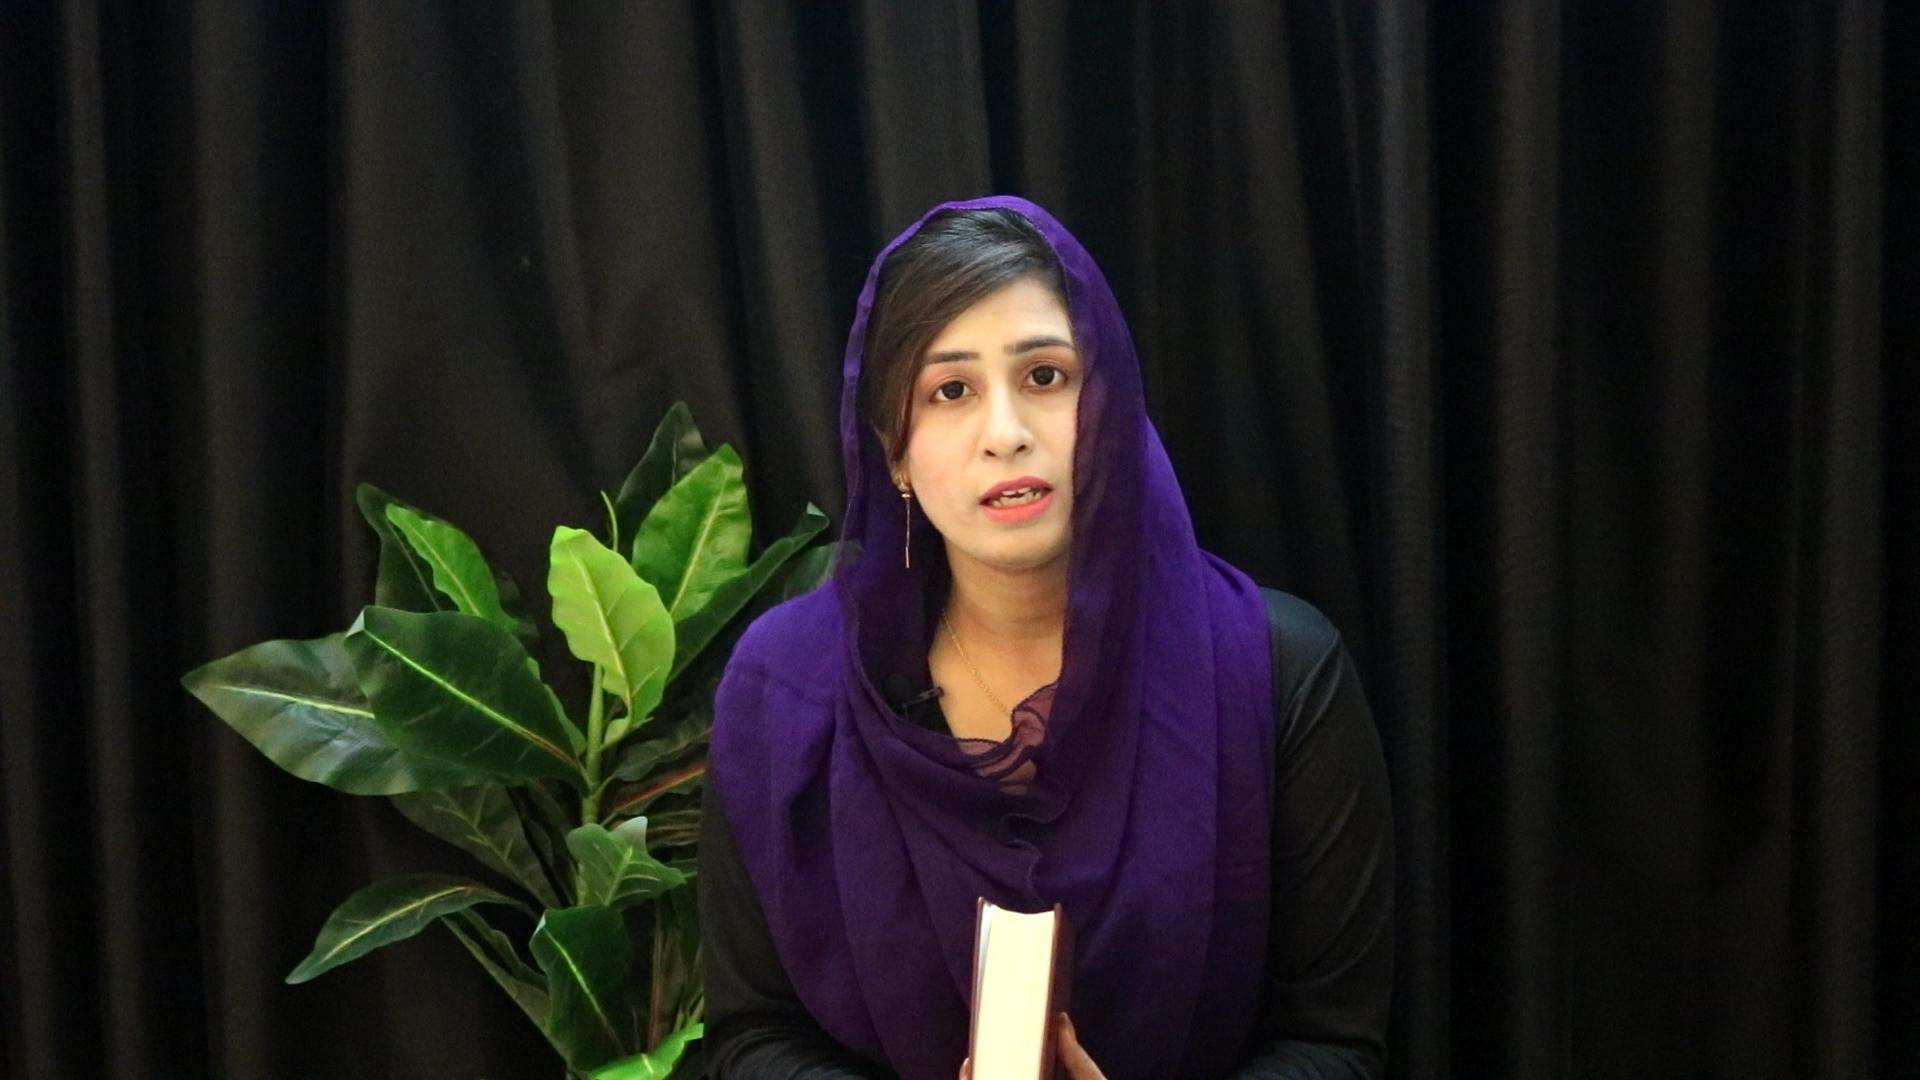 Refrain yourself from judging others - Zara Qandeel - Gospel for Muslims